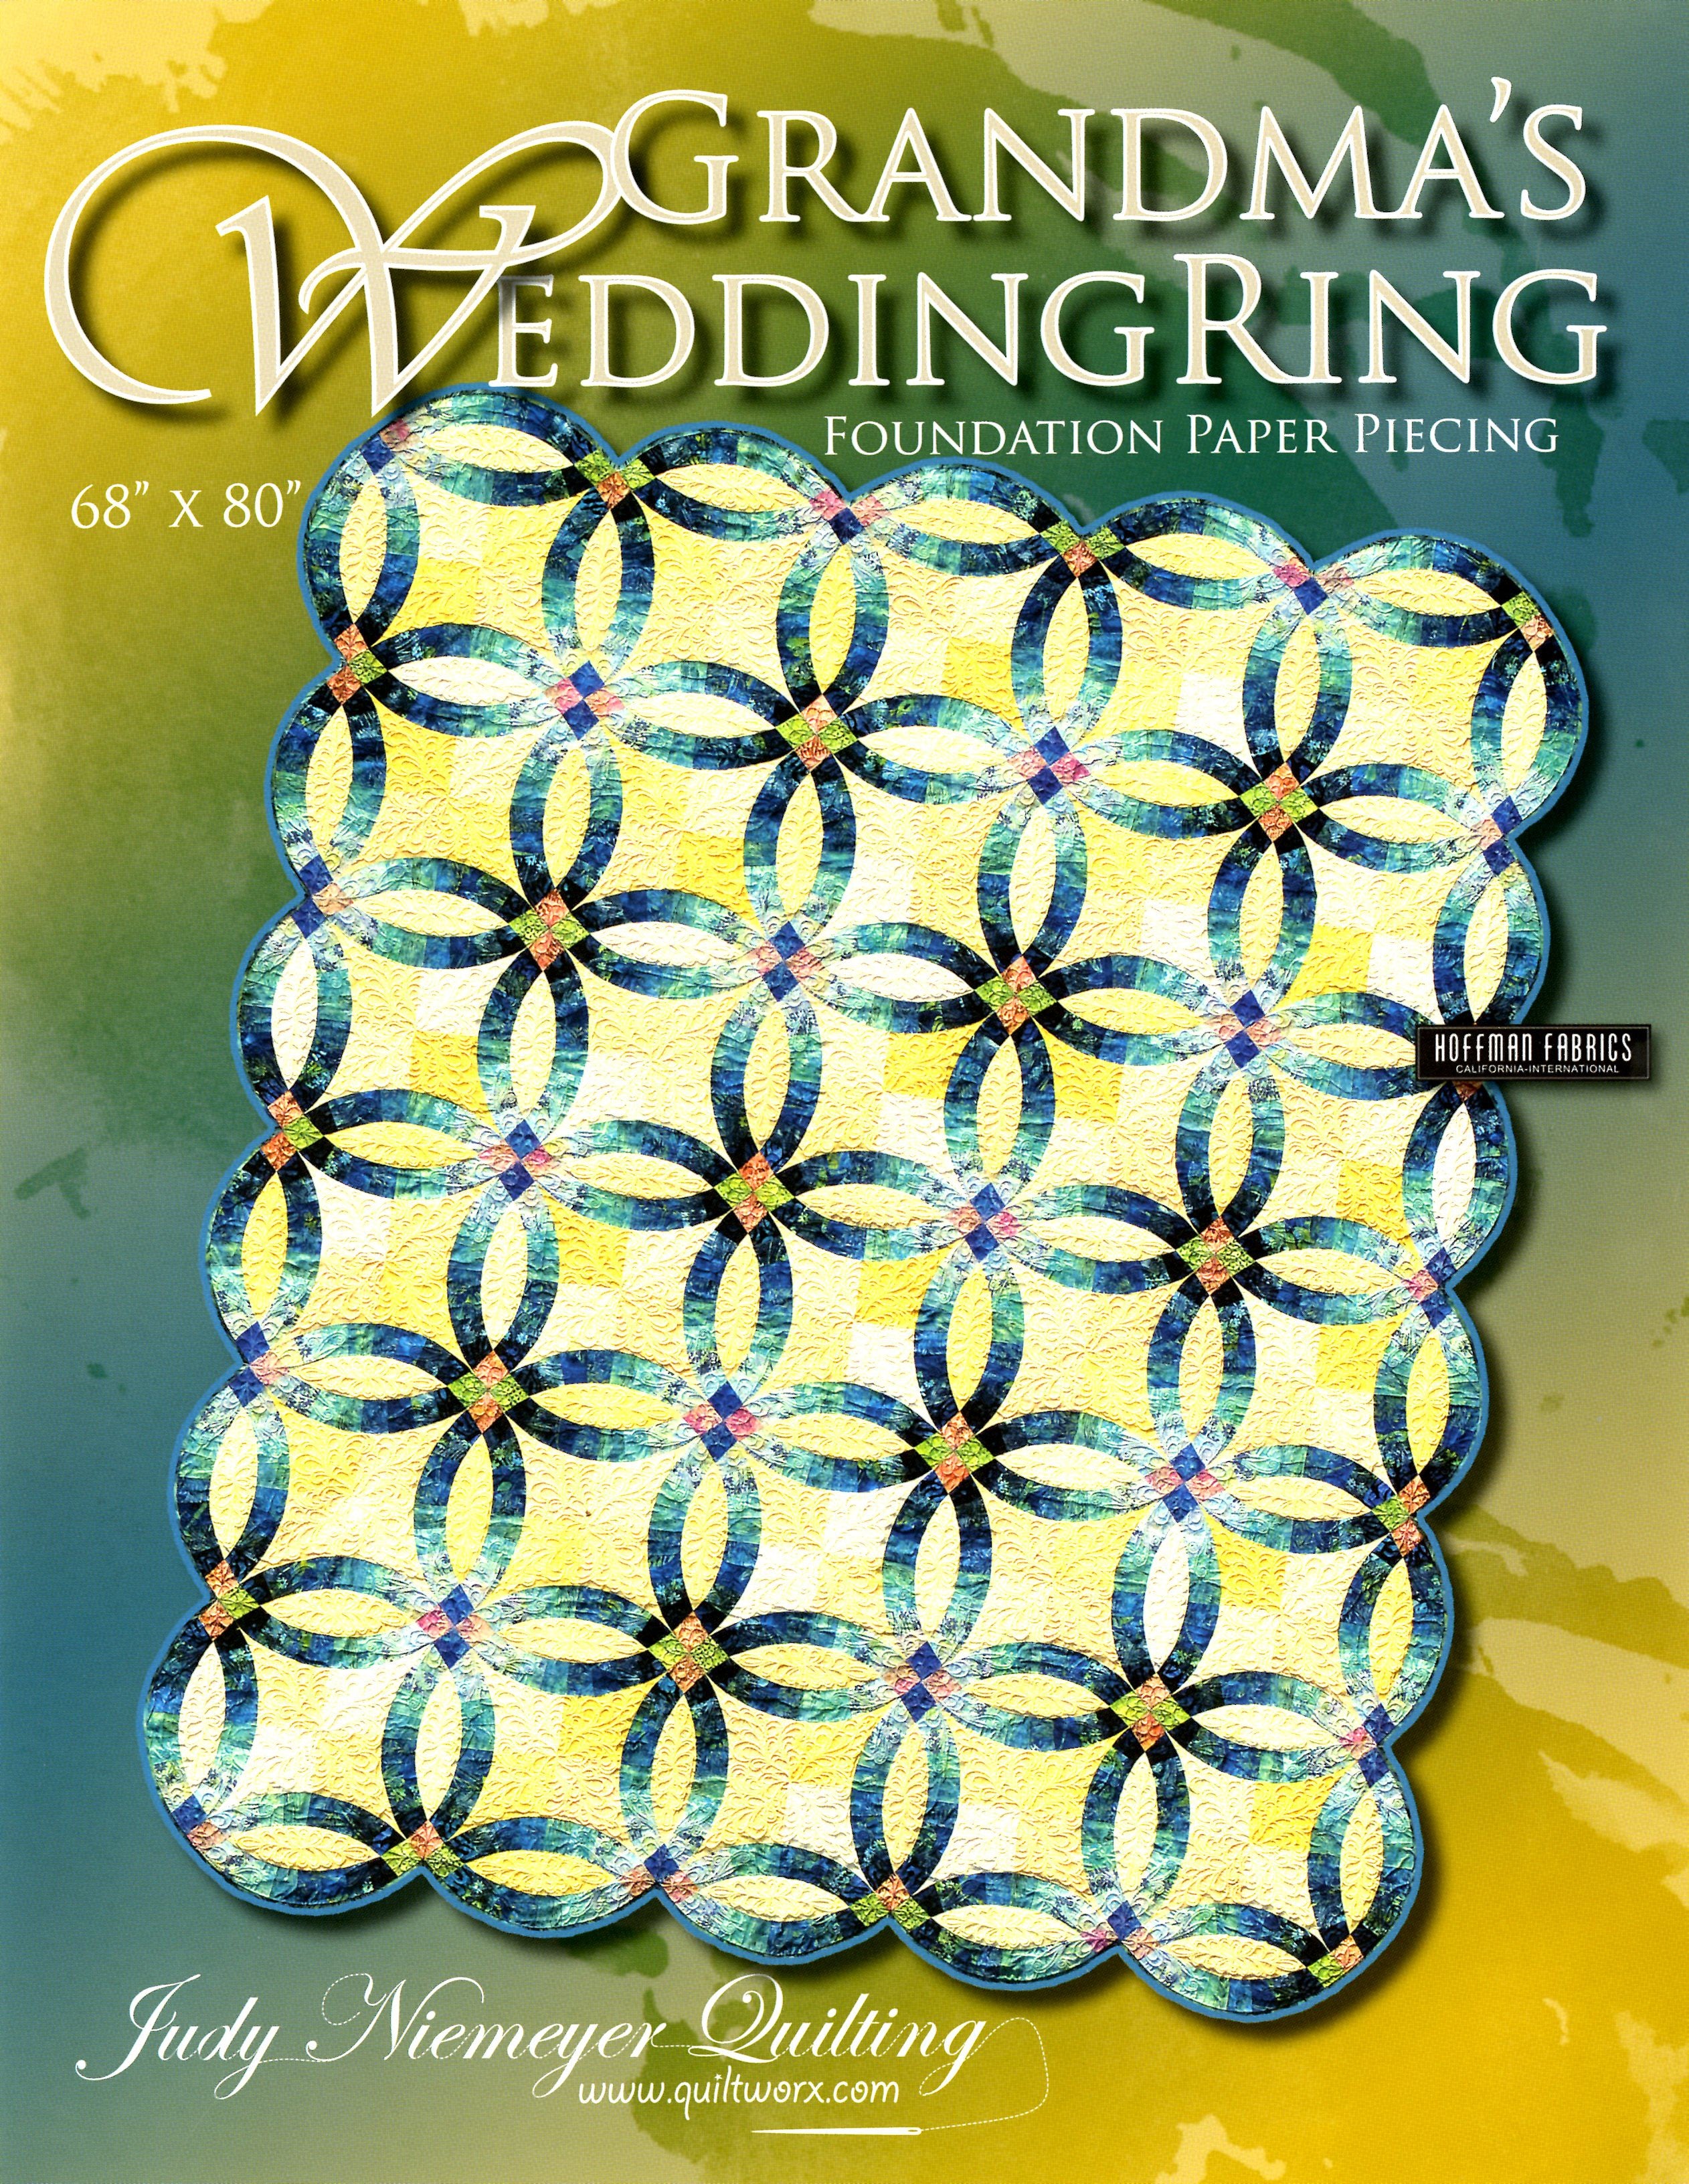 Grandma's Wedding Ring Foundation Paper Pieced Quilt Pattern by Judy Niemeyer of Quiltworx